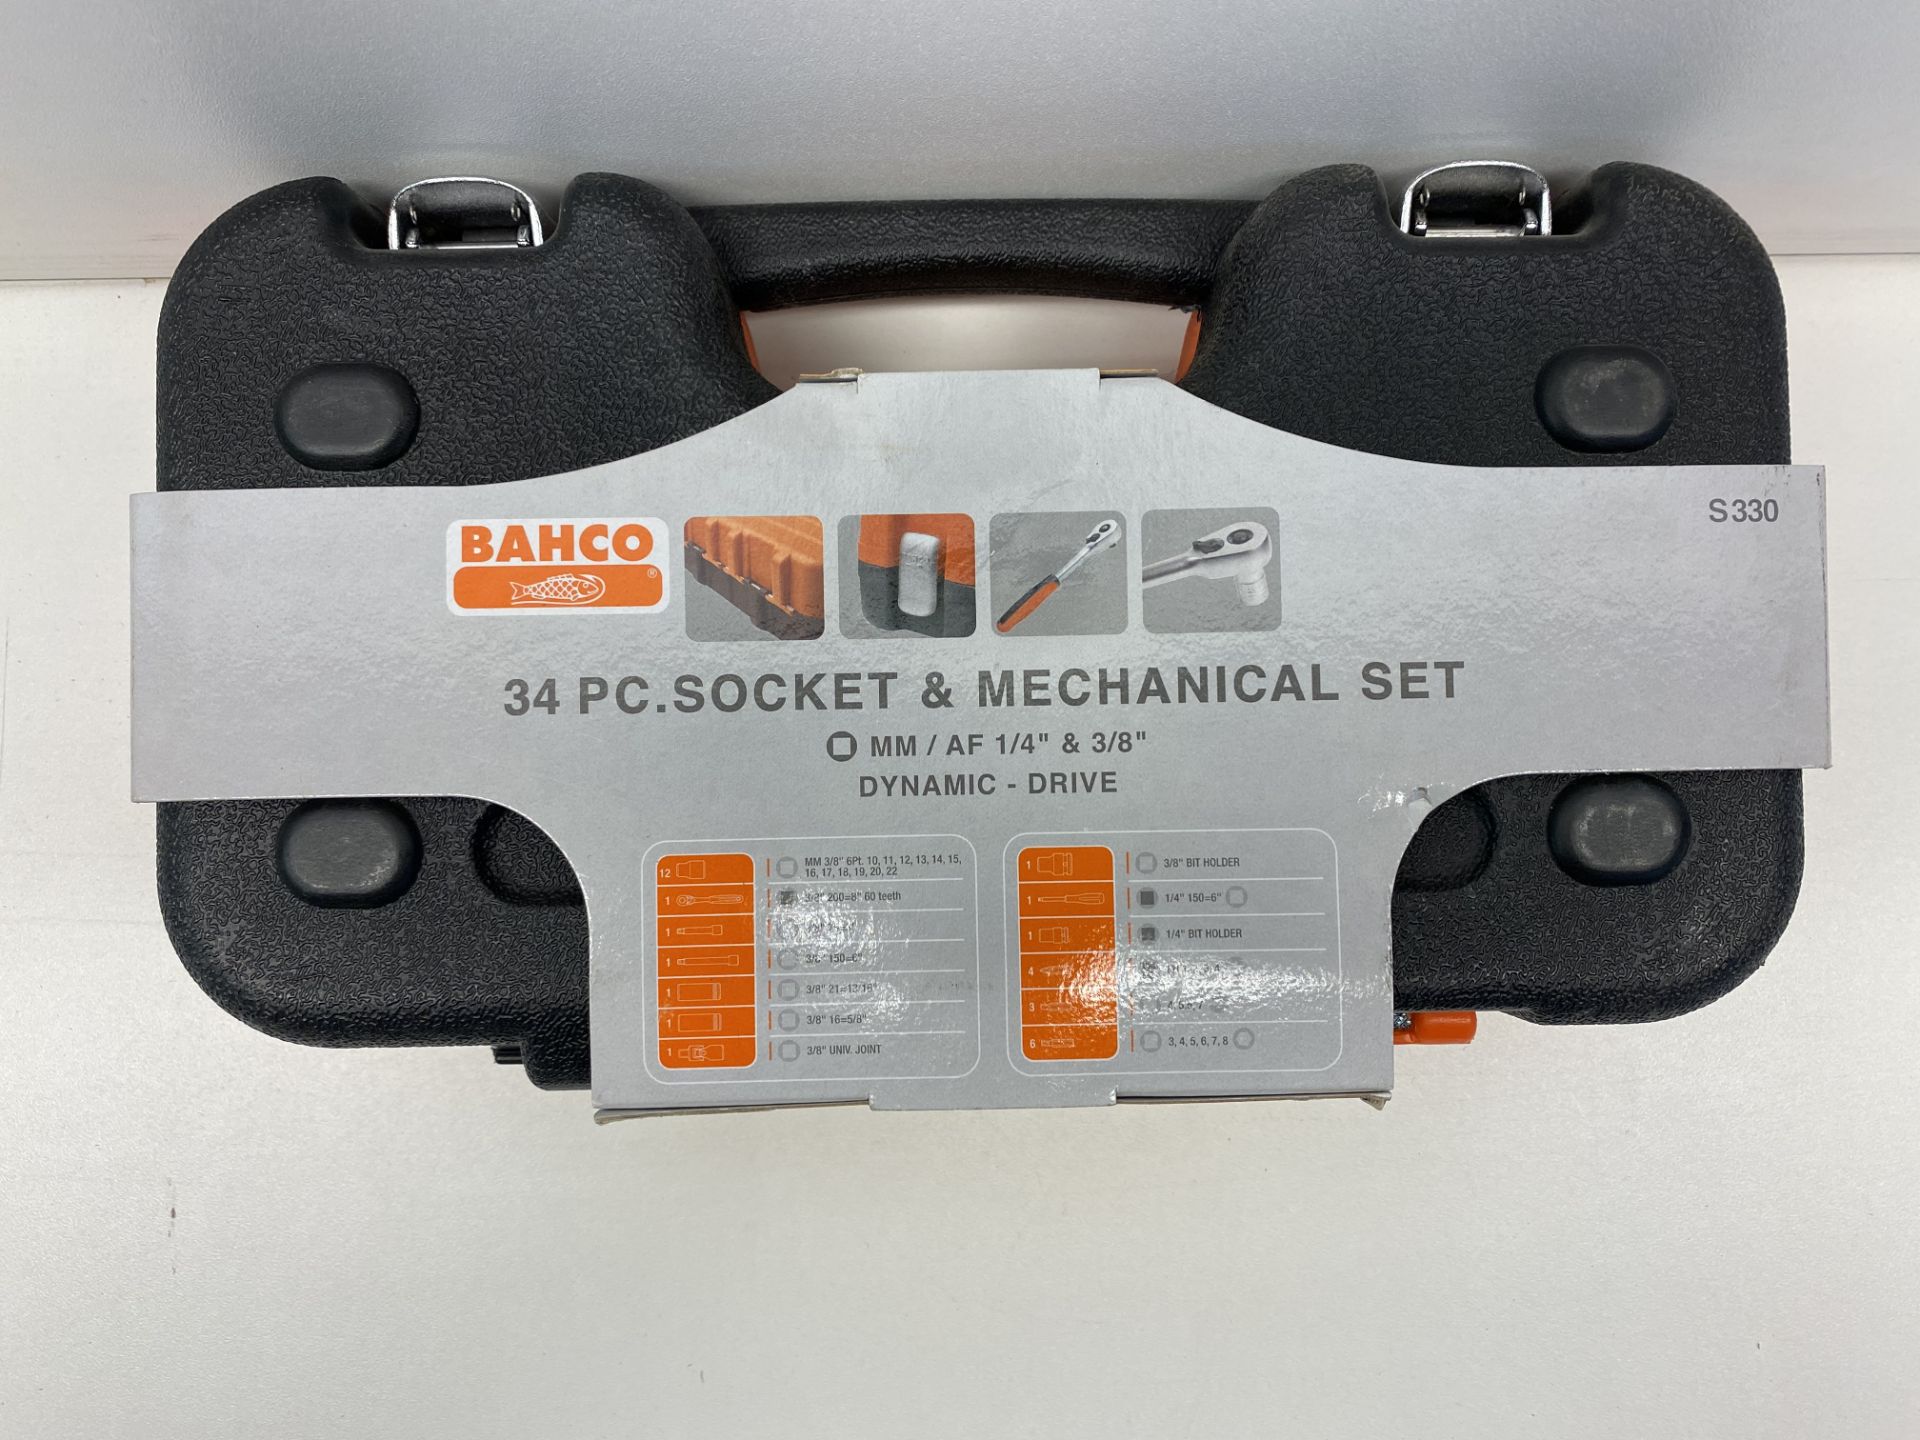 Bahco S330 34 Piece Socket & Mechanical Set | RRP £32.99 - Image 2 of 3